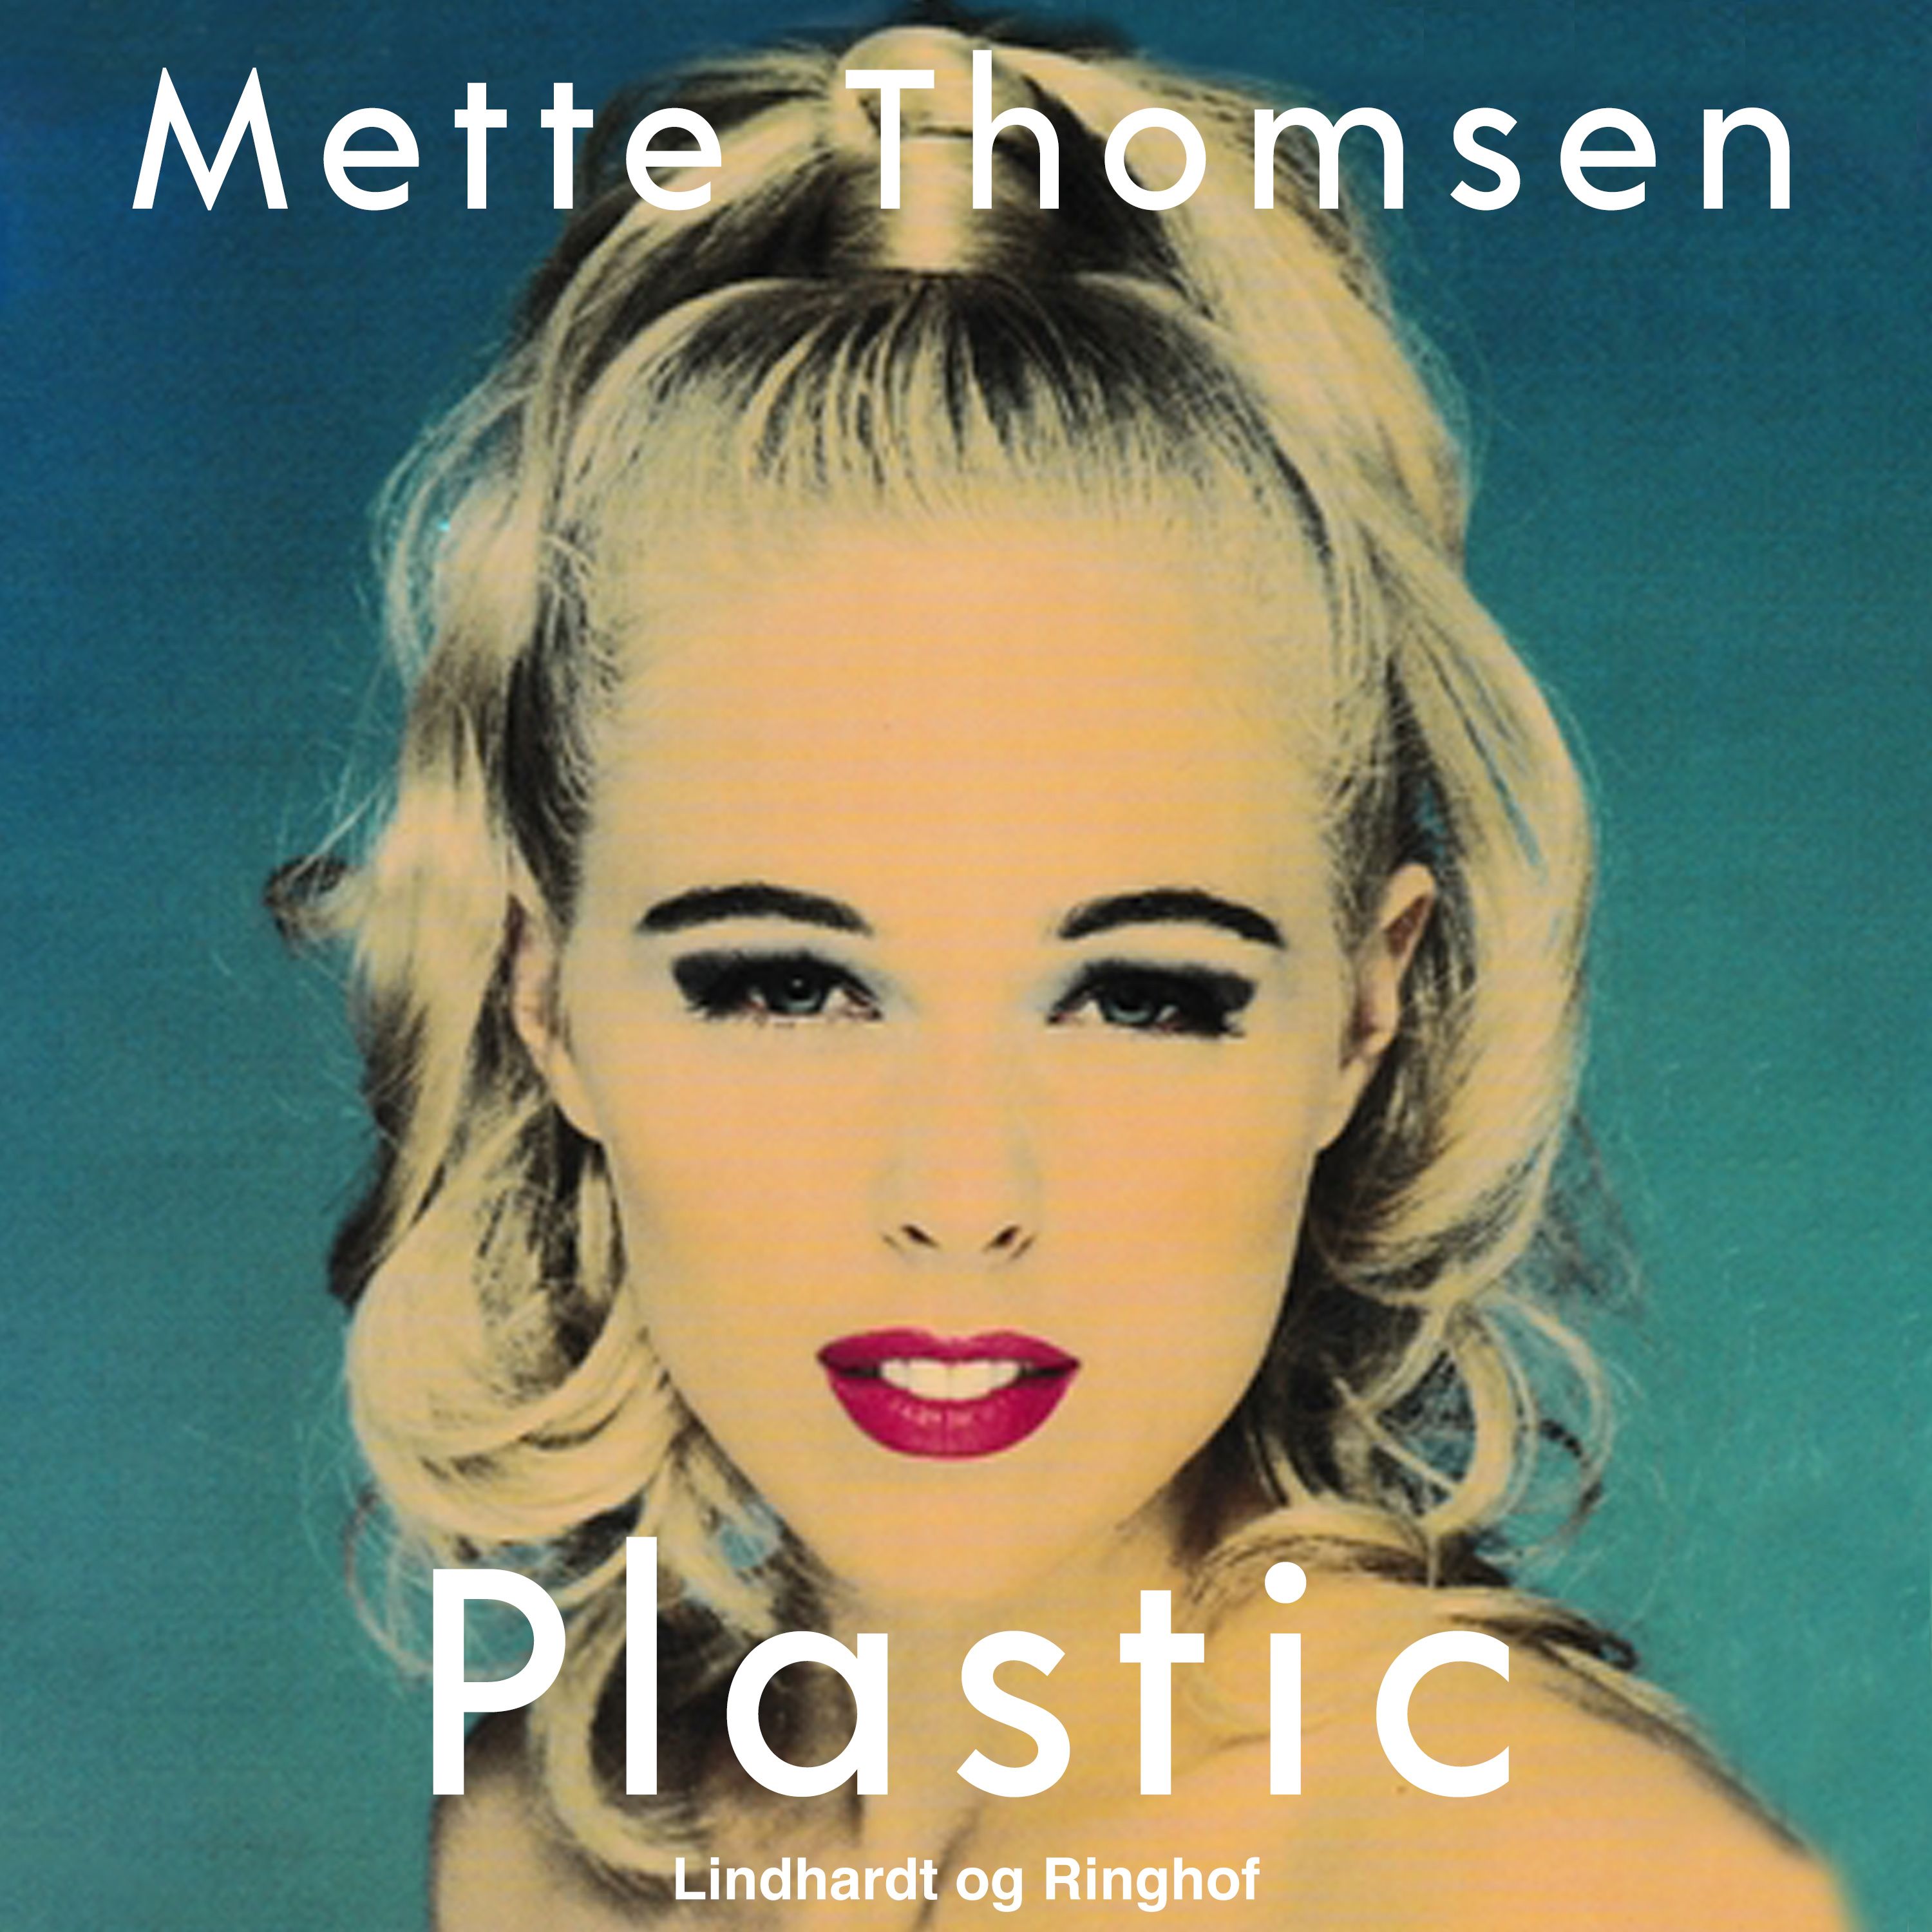 Plastic, ljudbok av Mette Thomsen